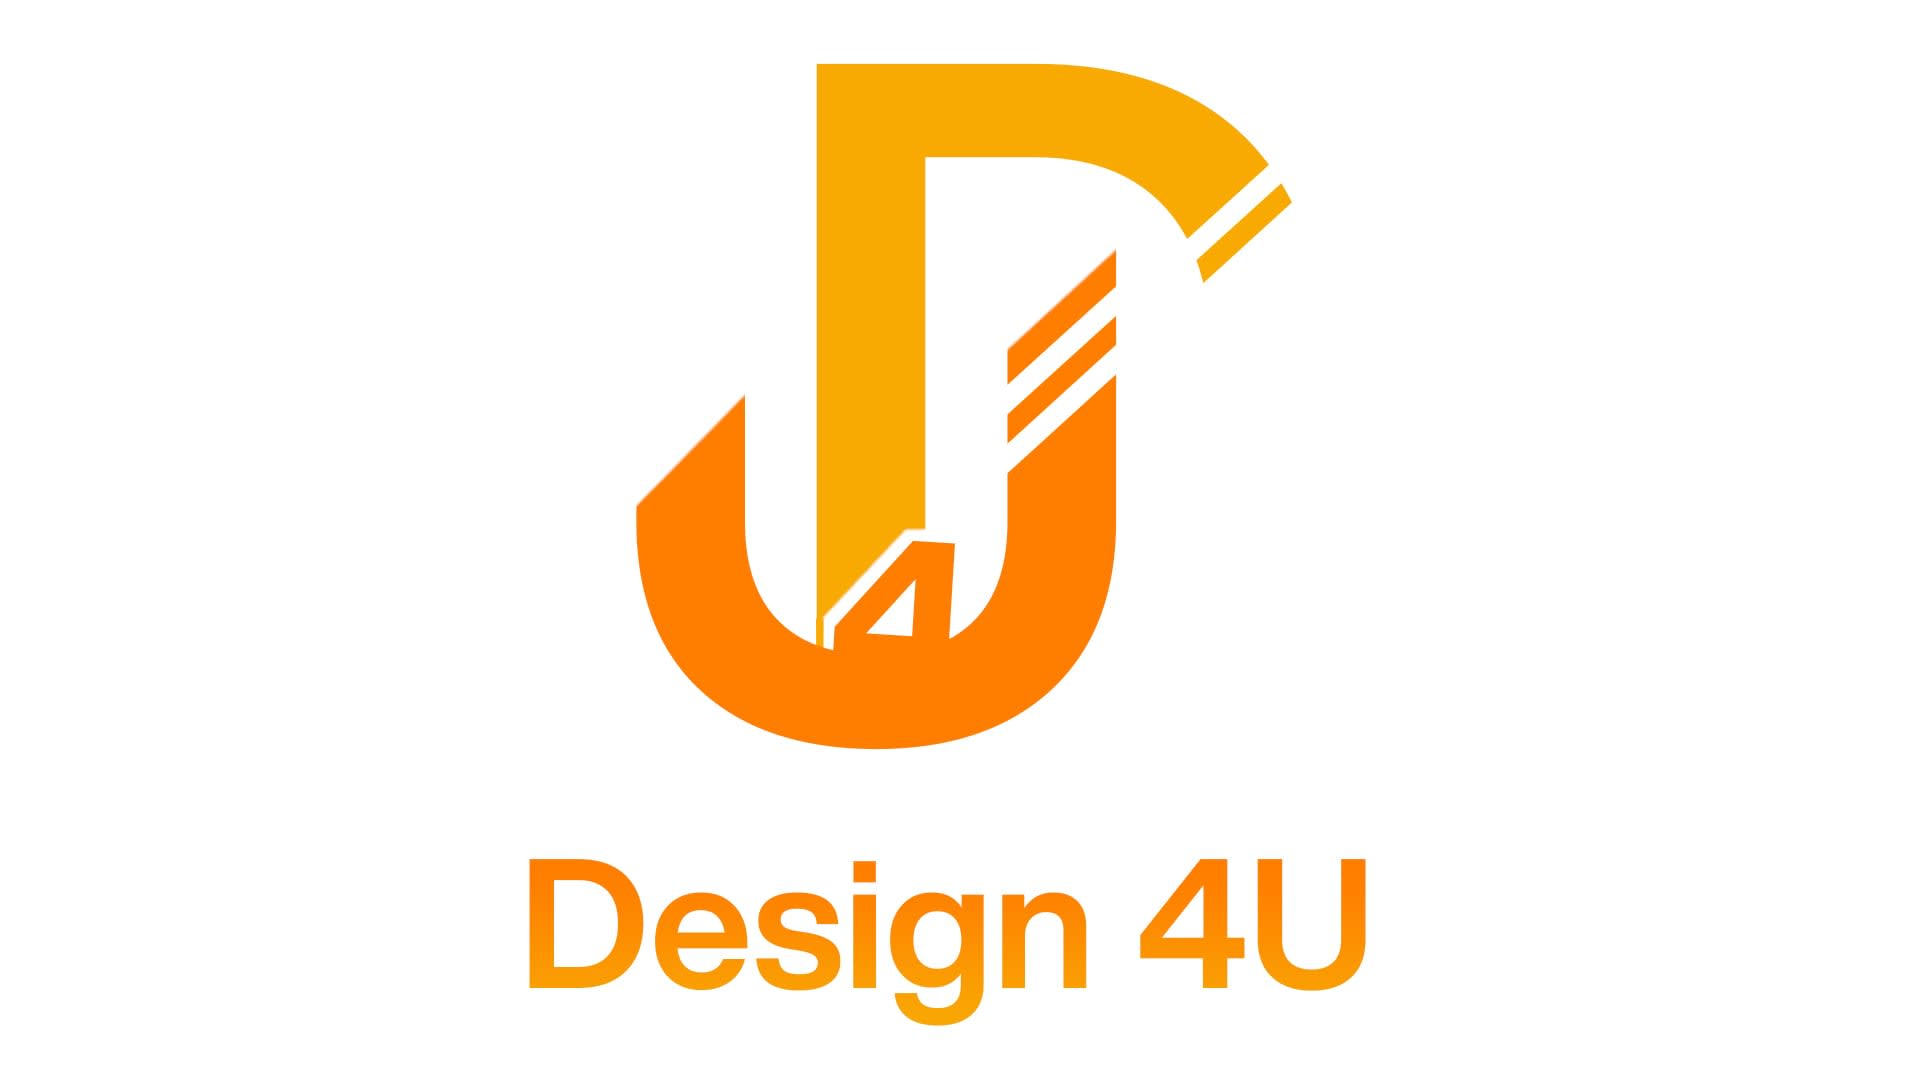 Design 4U